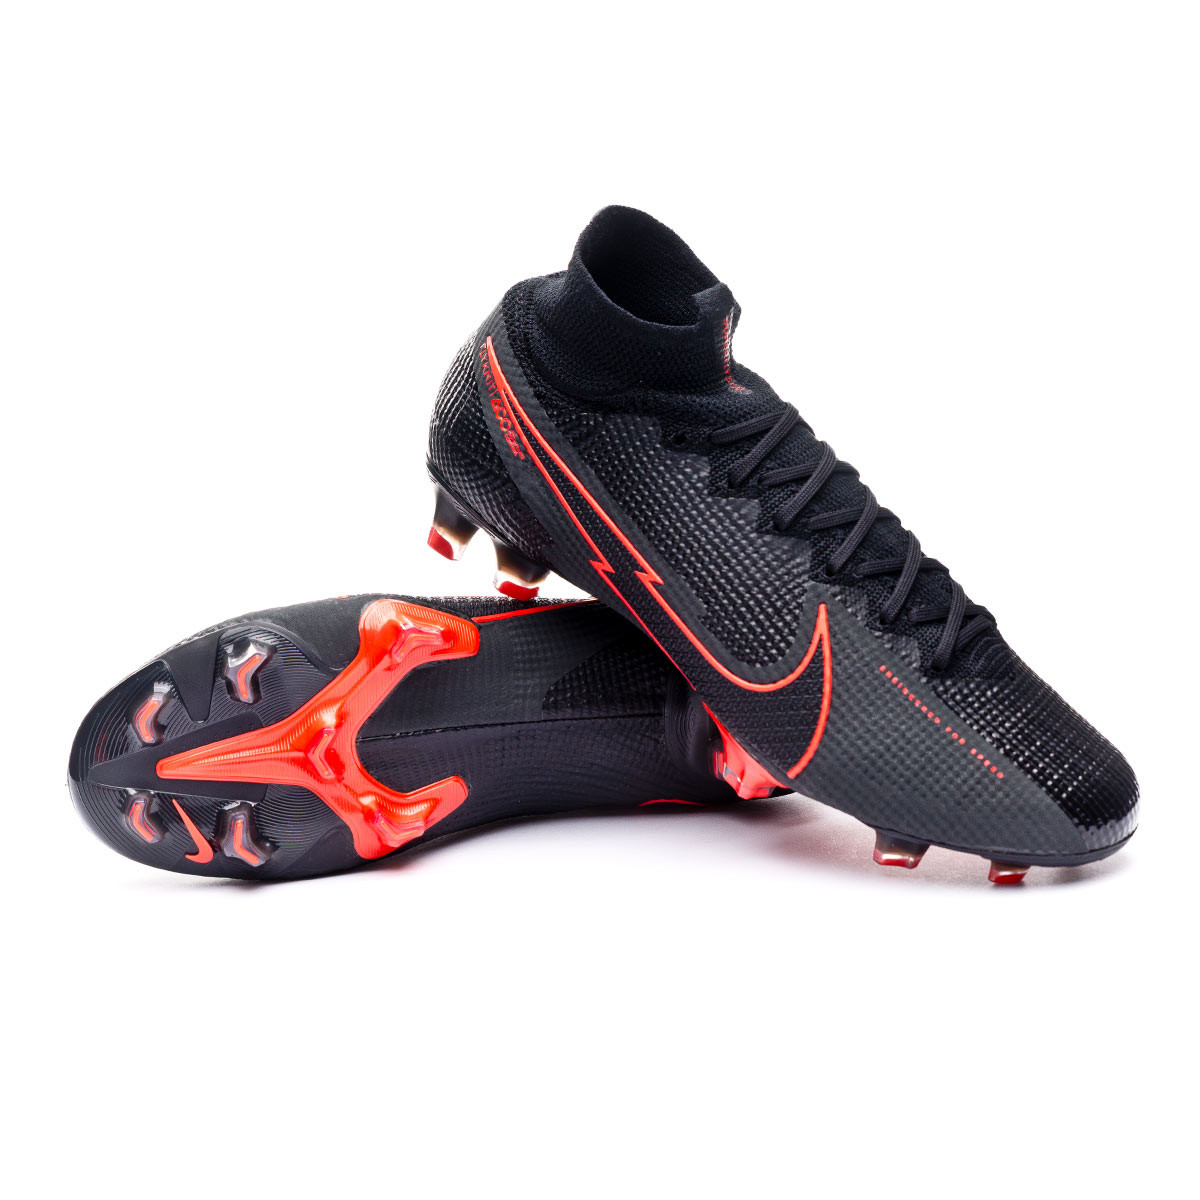 Bota de fútbol Nike Mercurial Superfly VII Elite FG Black-Black-Dark smoke  grey-Chile red - Tienda de fútbol Fútbol Emotion